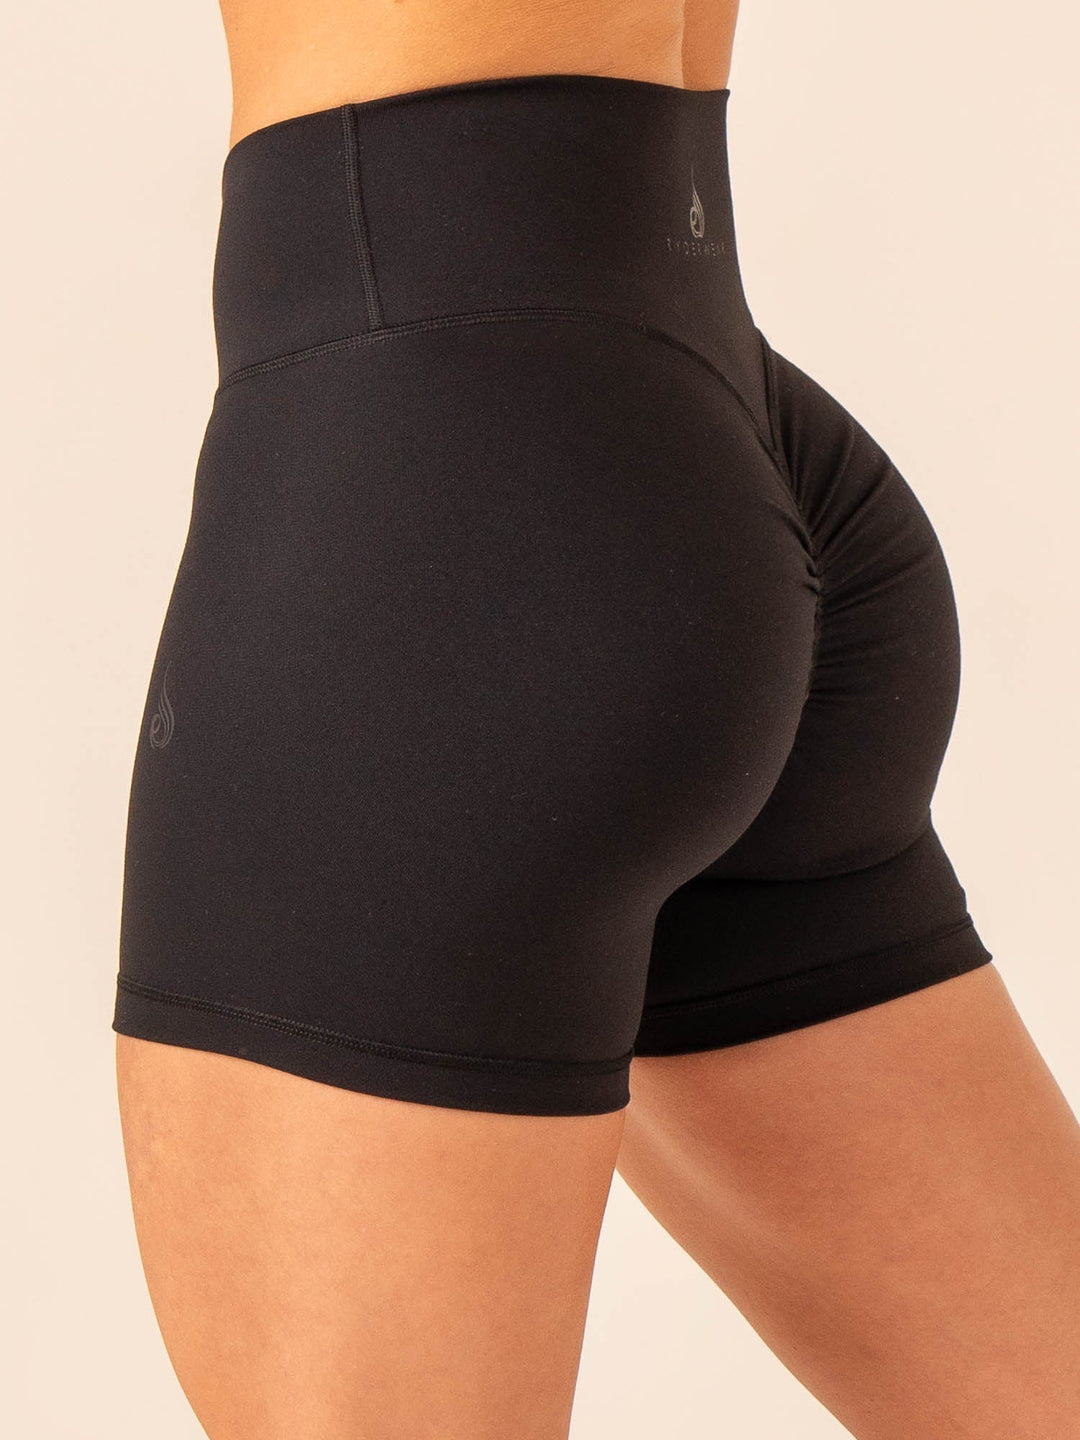 Extreme Scrunch Shorts - Black Clothing Ryderwear 